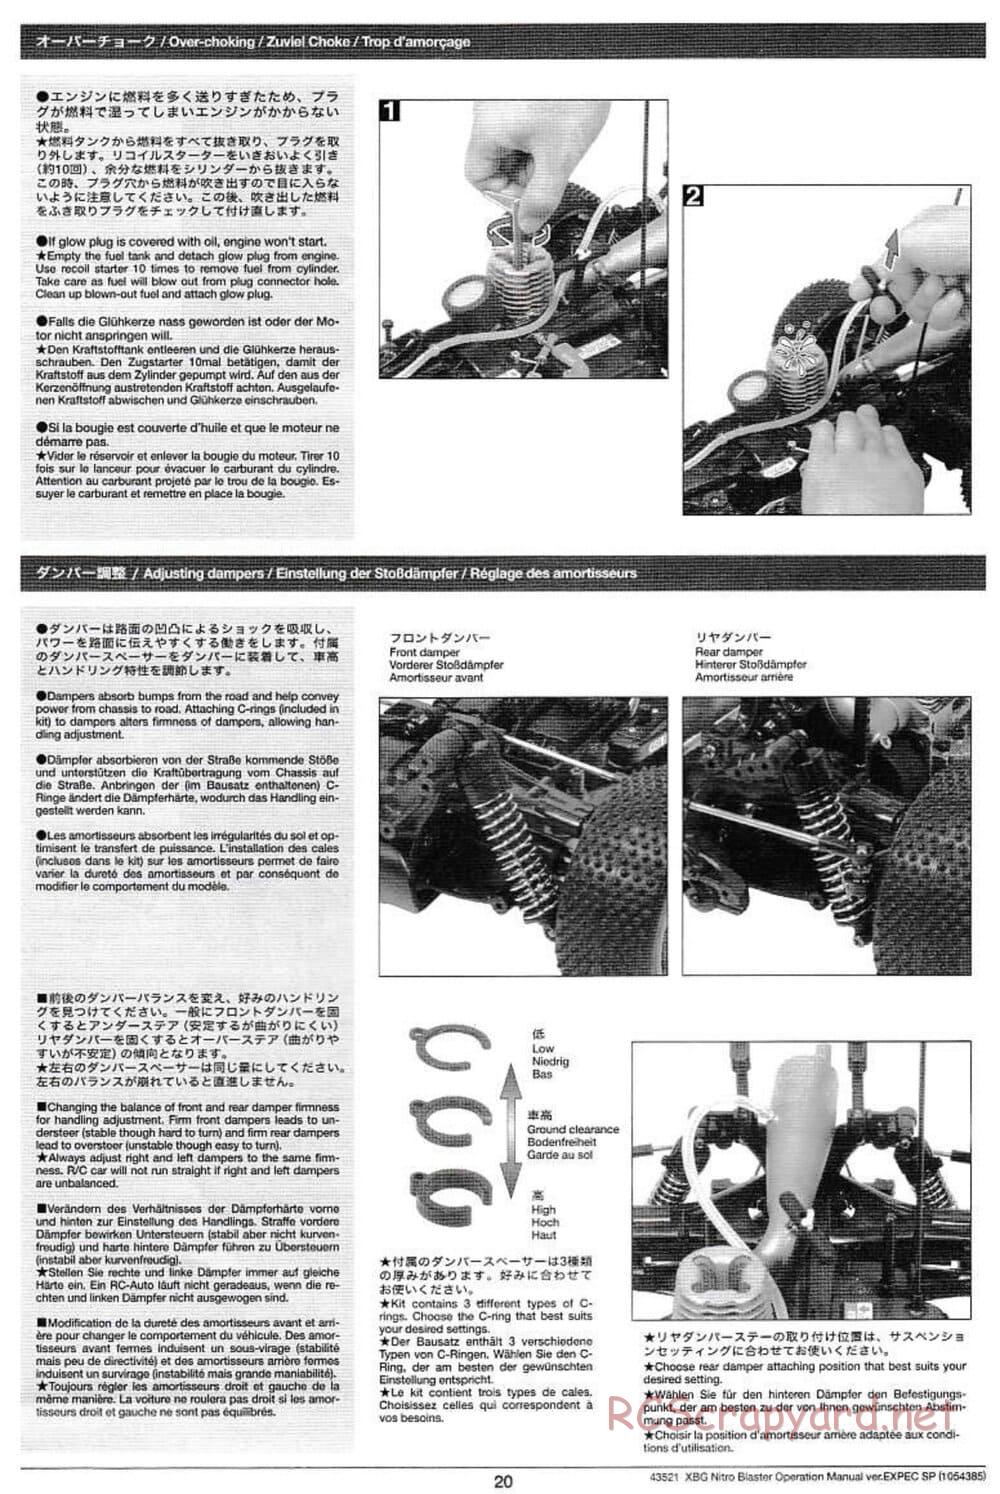 Tamiya - Nitro Blaster - NDF-01 - Operating Manual - Page 20